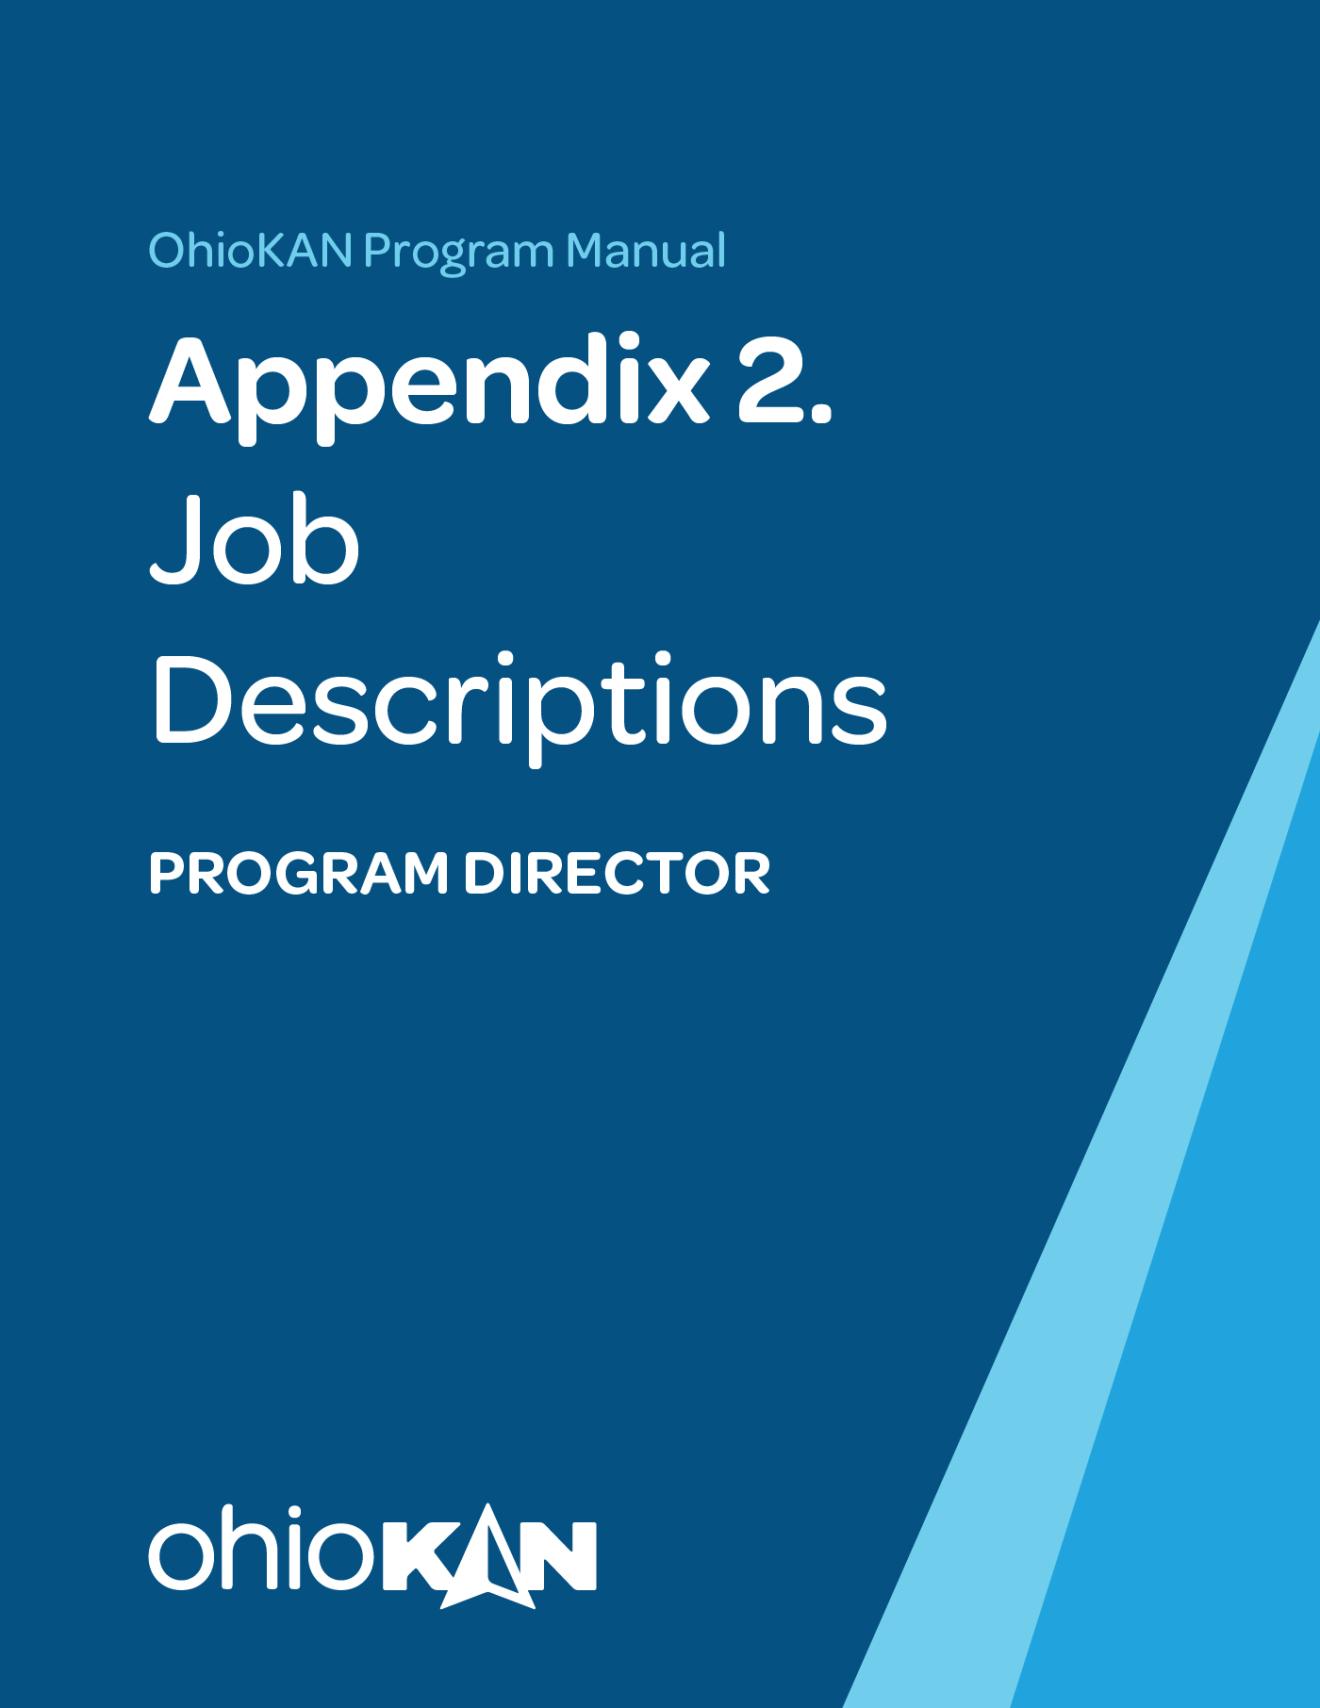 Appendix 2 Program Director